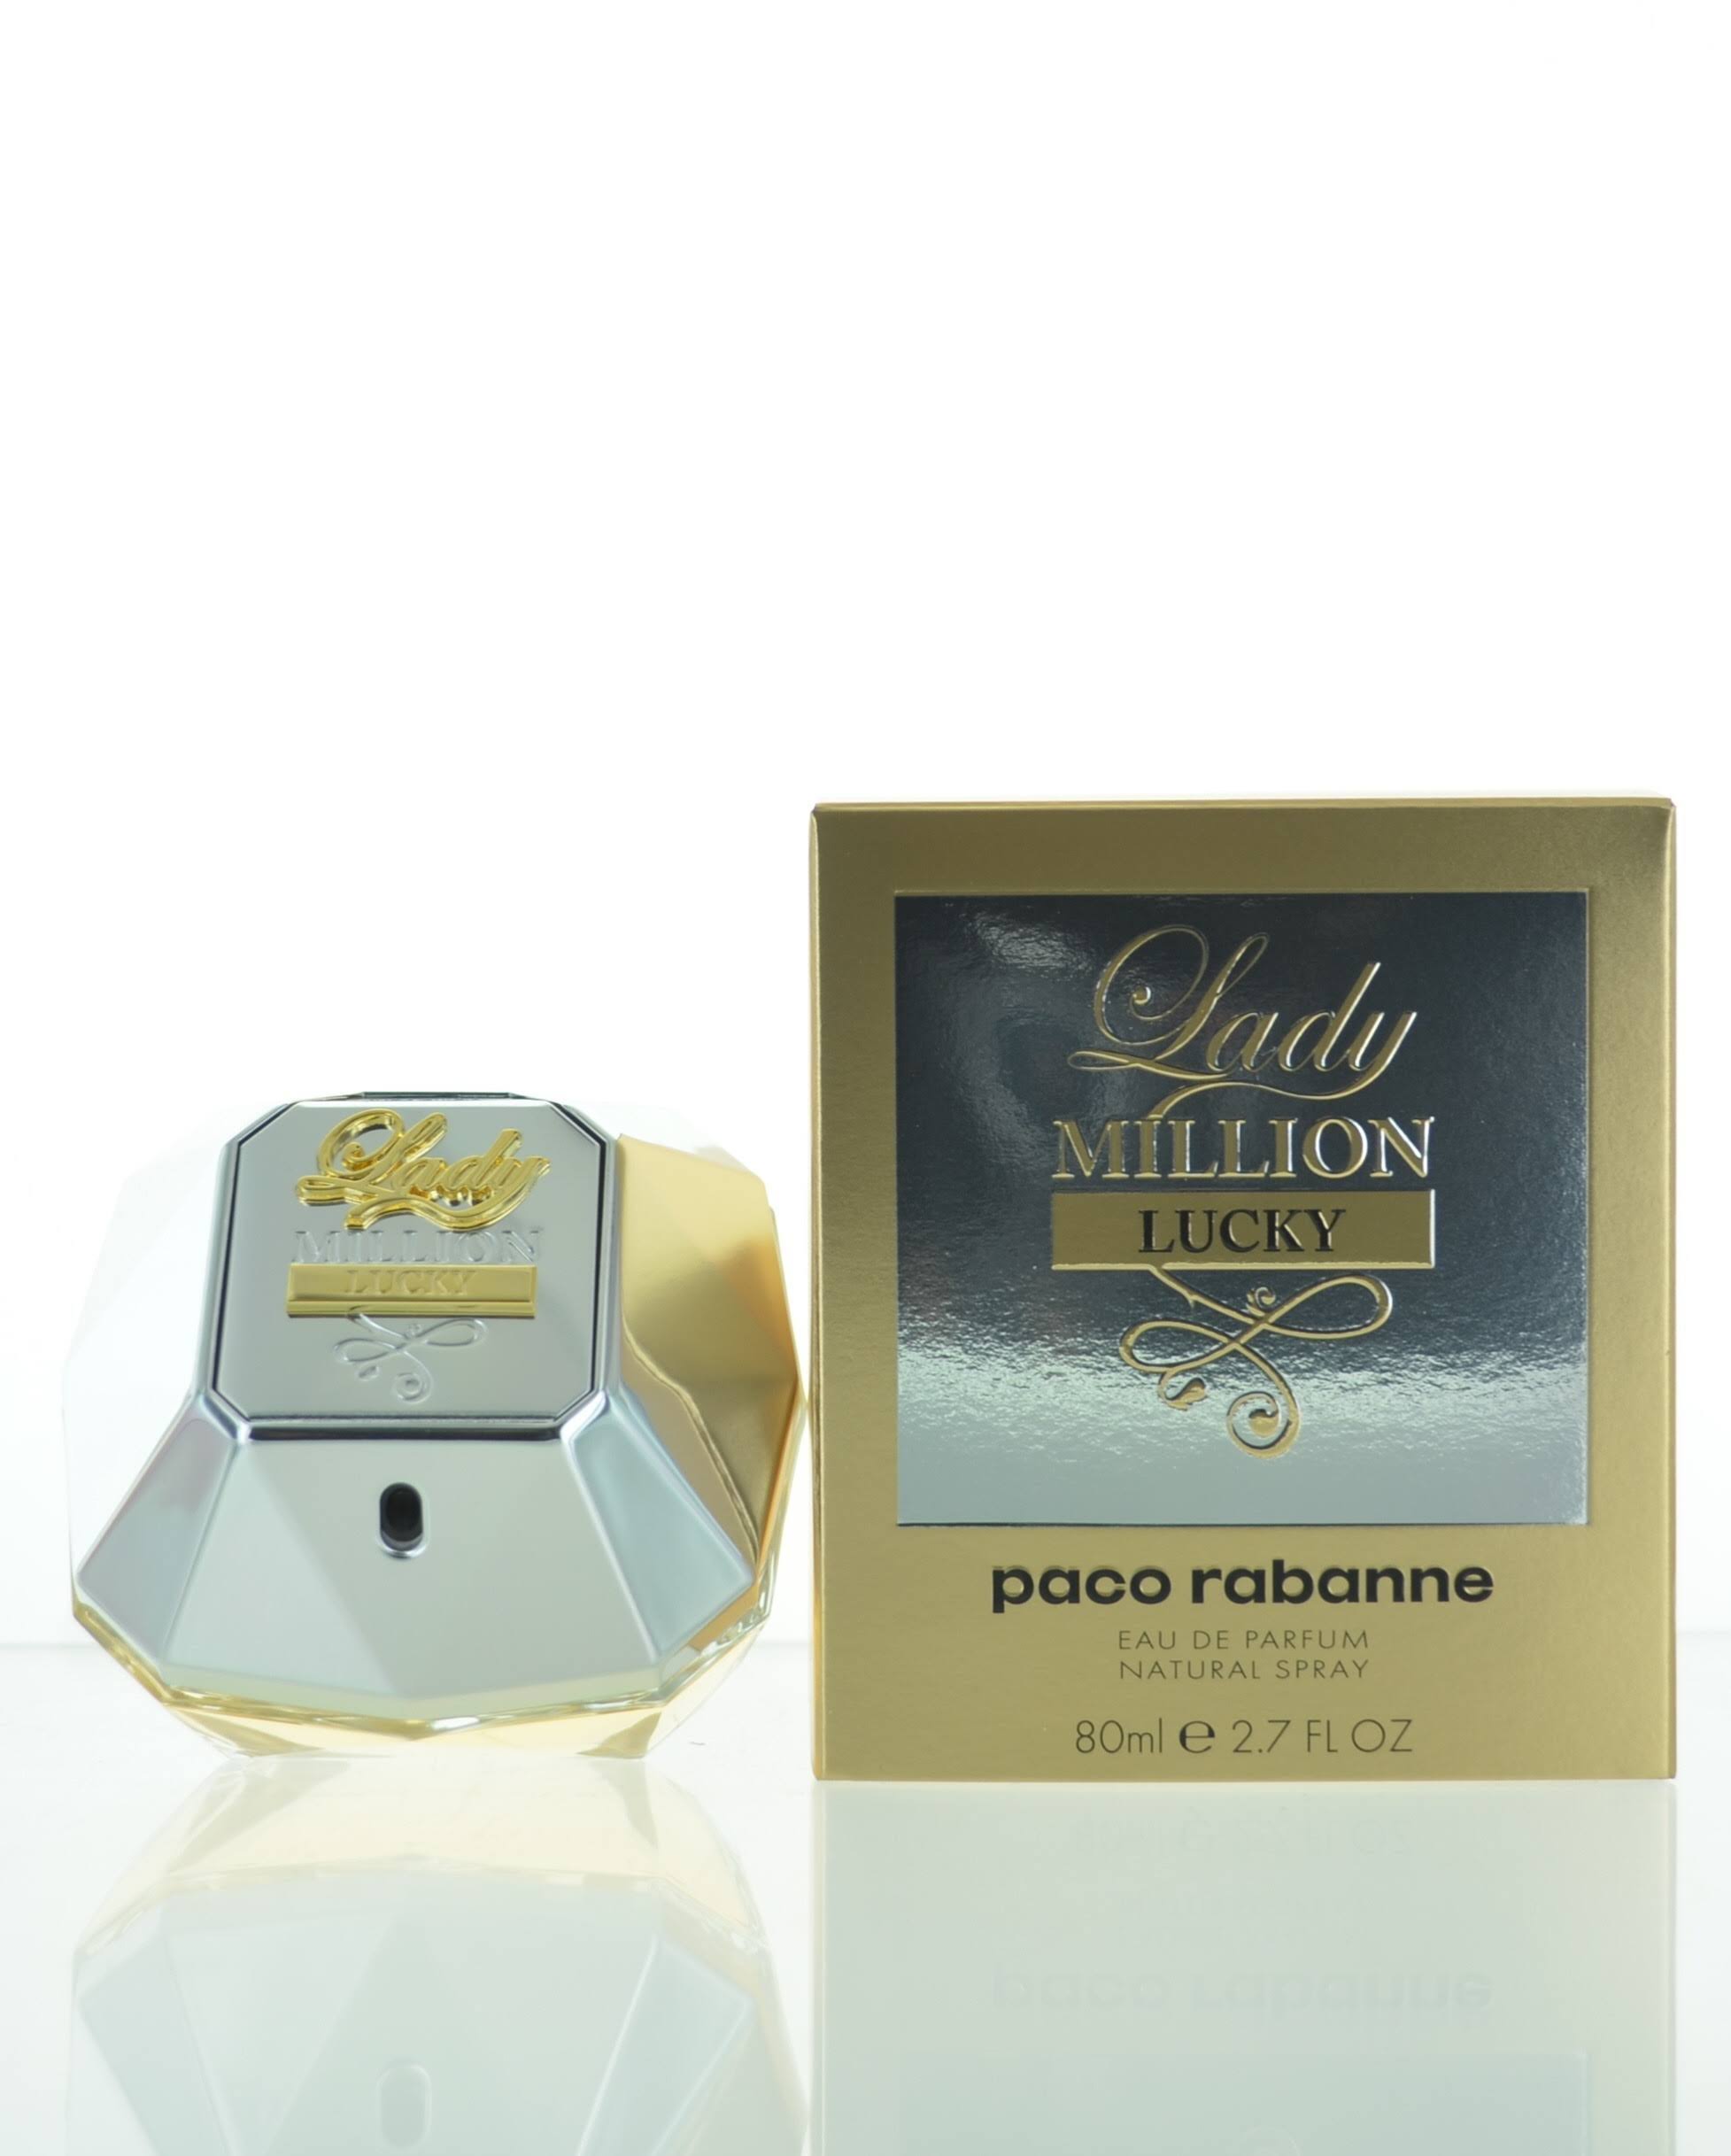 Paco Rabanne Women's Lady Million Lucky Eau De Parfum Spray - 80ml